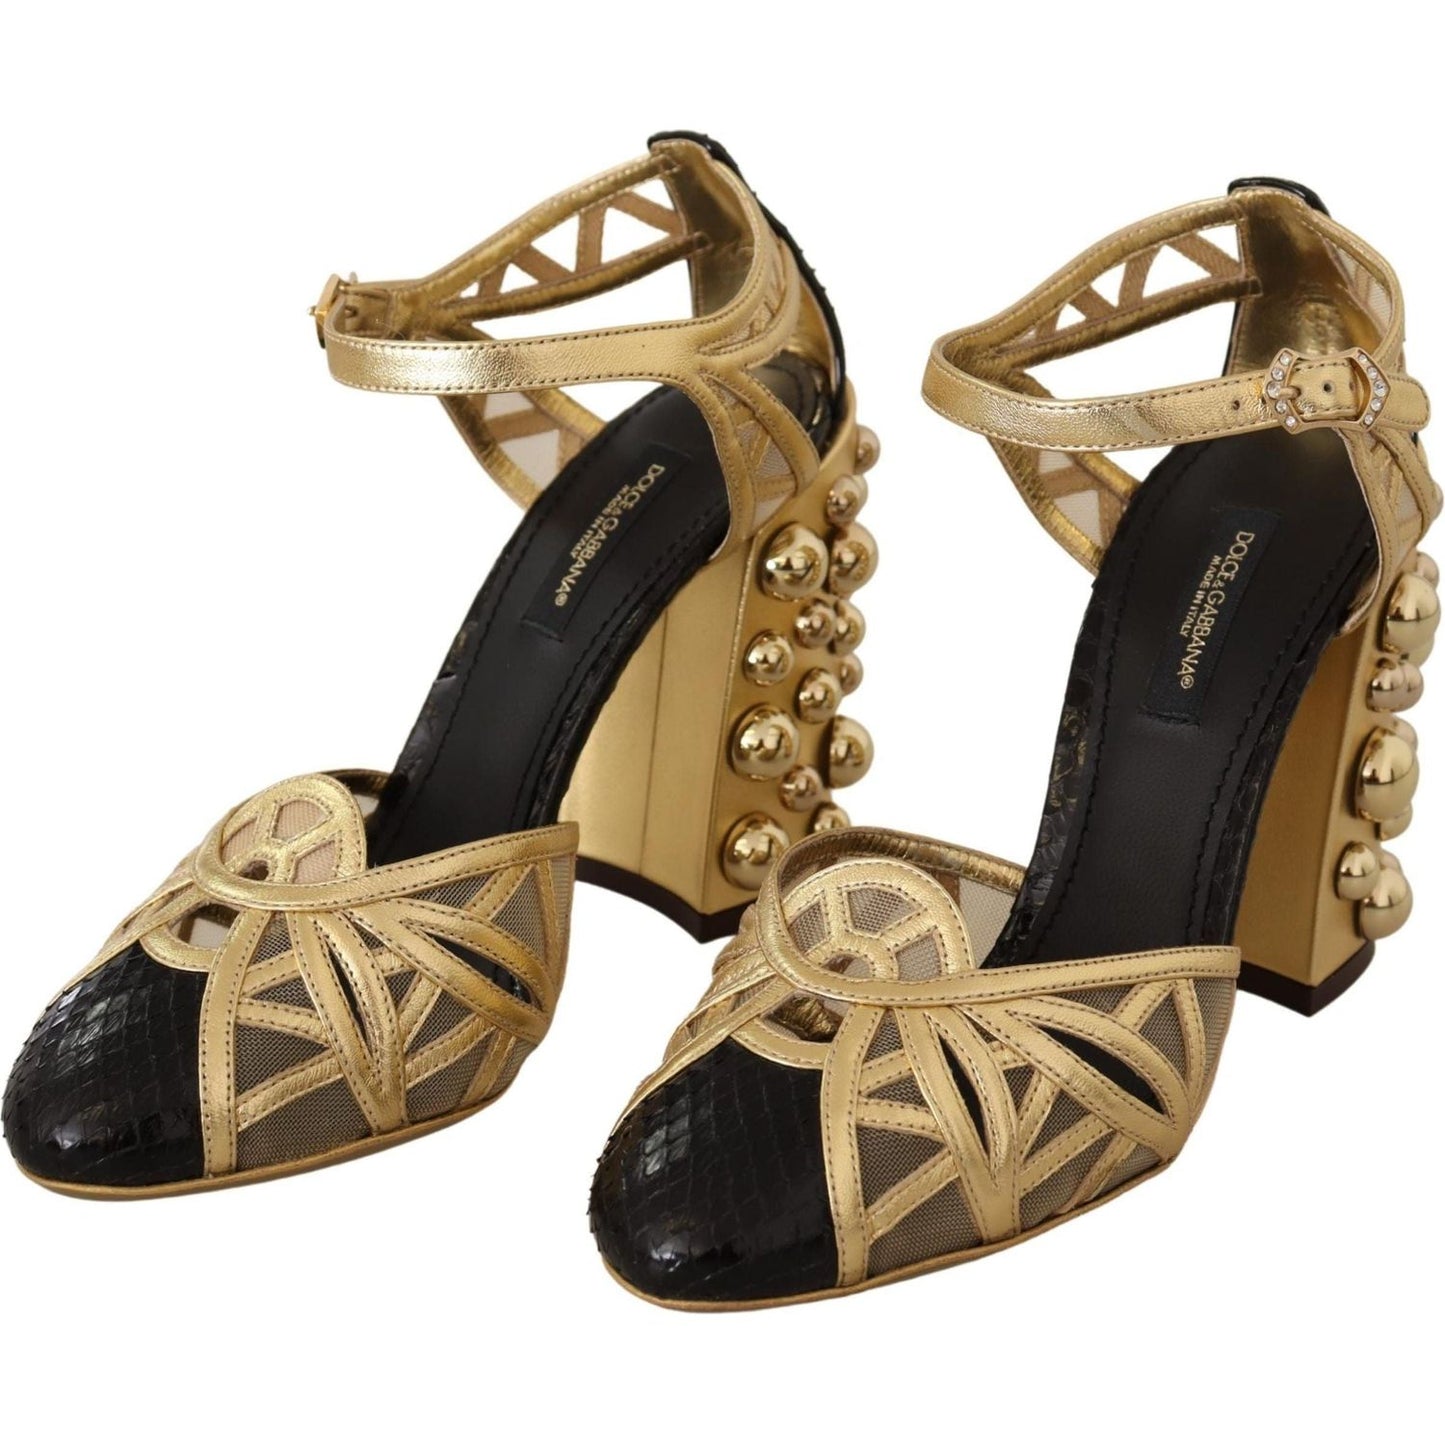 Dolce & Gabbana Elegant Crystal Studded Leather Pumps black-gold-leather-studded-ankle-straps-shoes IMG_5833-scaled-3d5dc4e0-1cb.jpg